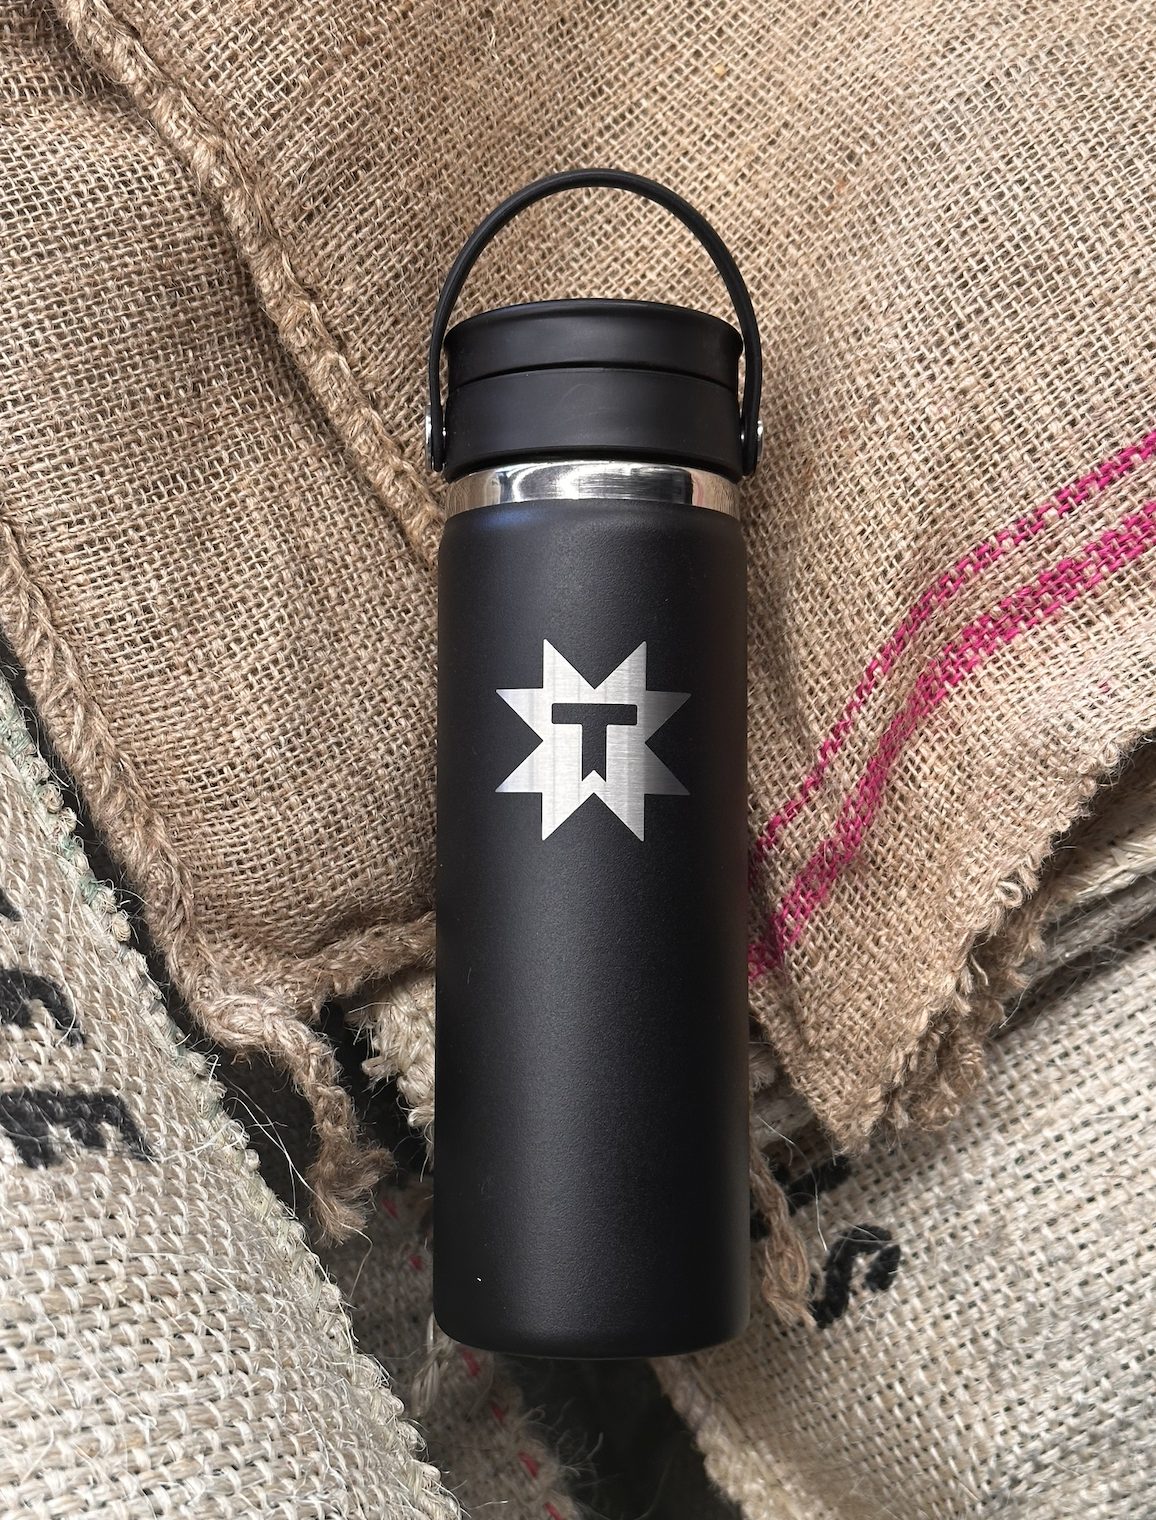 Hydro Flask 20oz - Black — Thump- Genuine Coffee